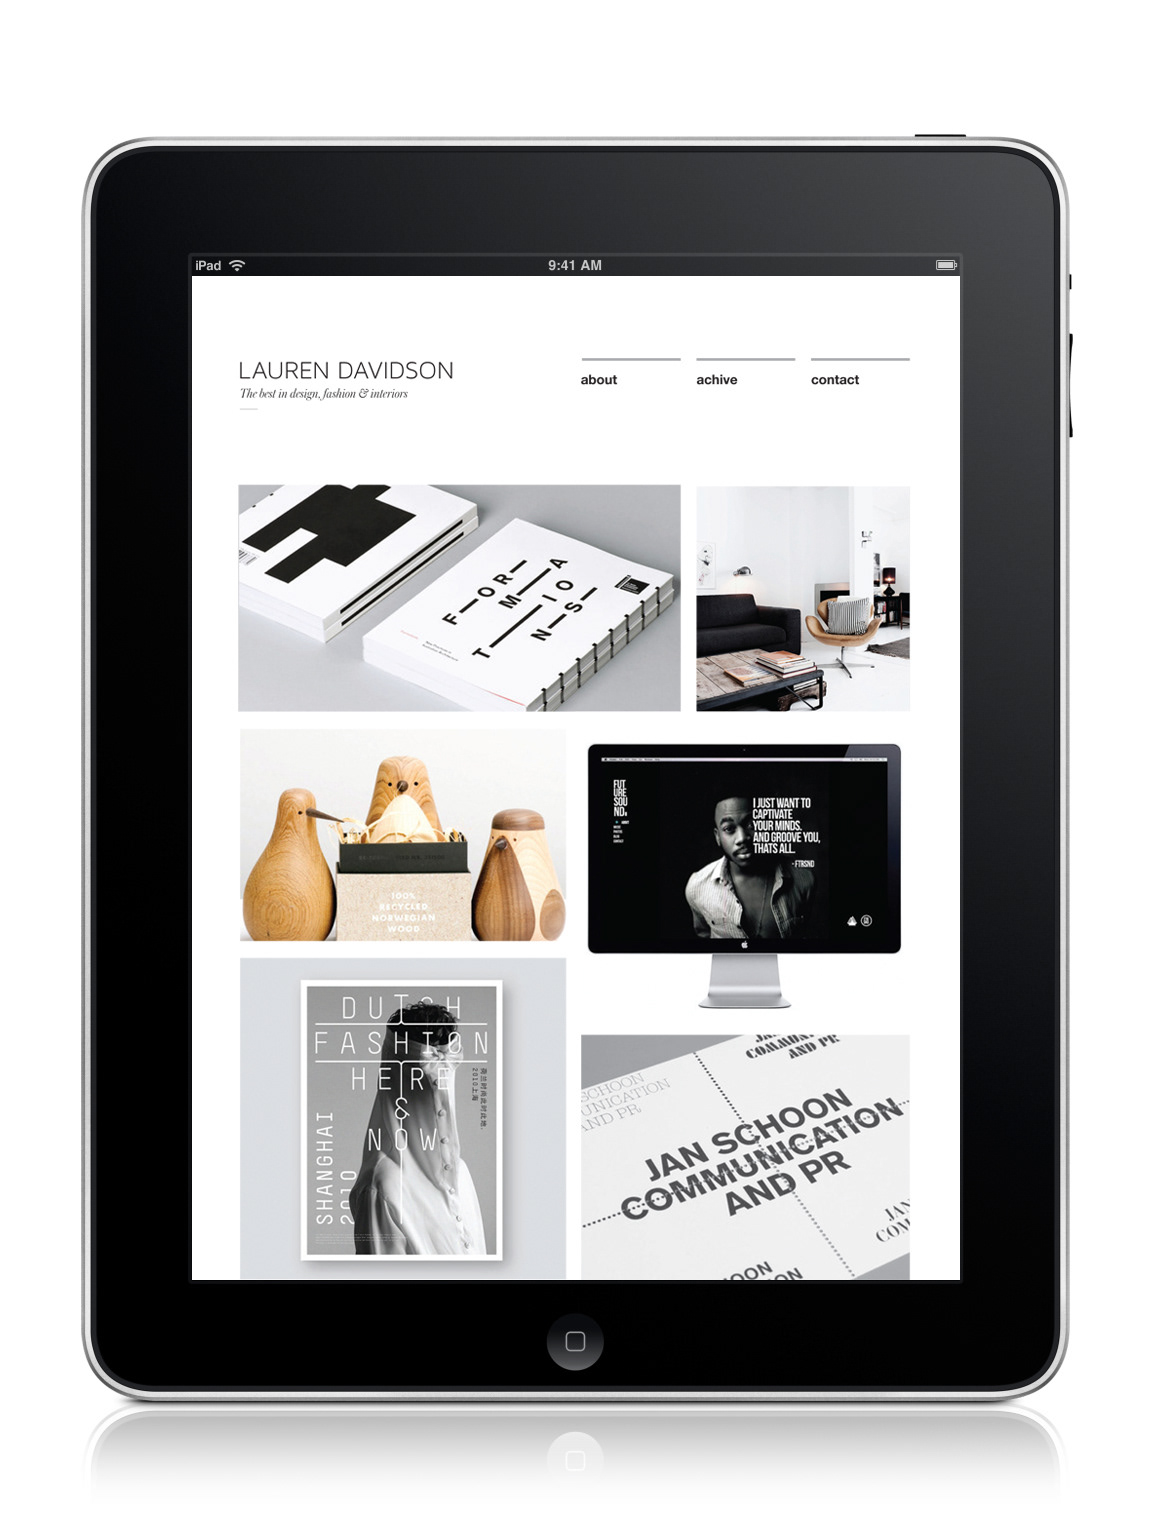 laurendavidson design Website inspiration minimal graphic monochrome clean Blog tumblr iPad iMac online